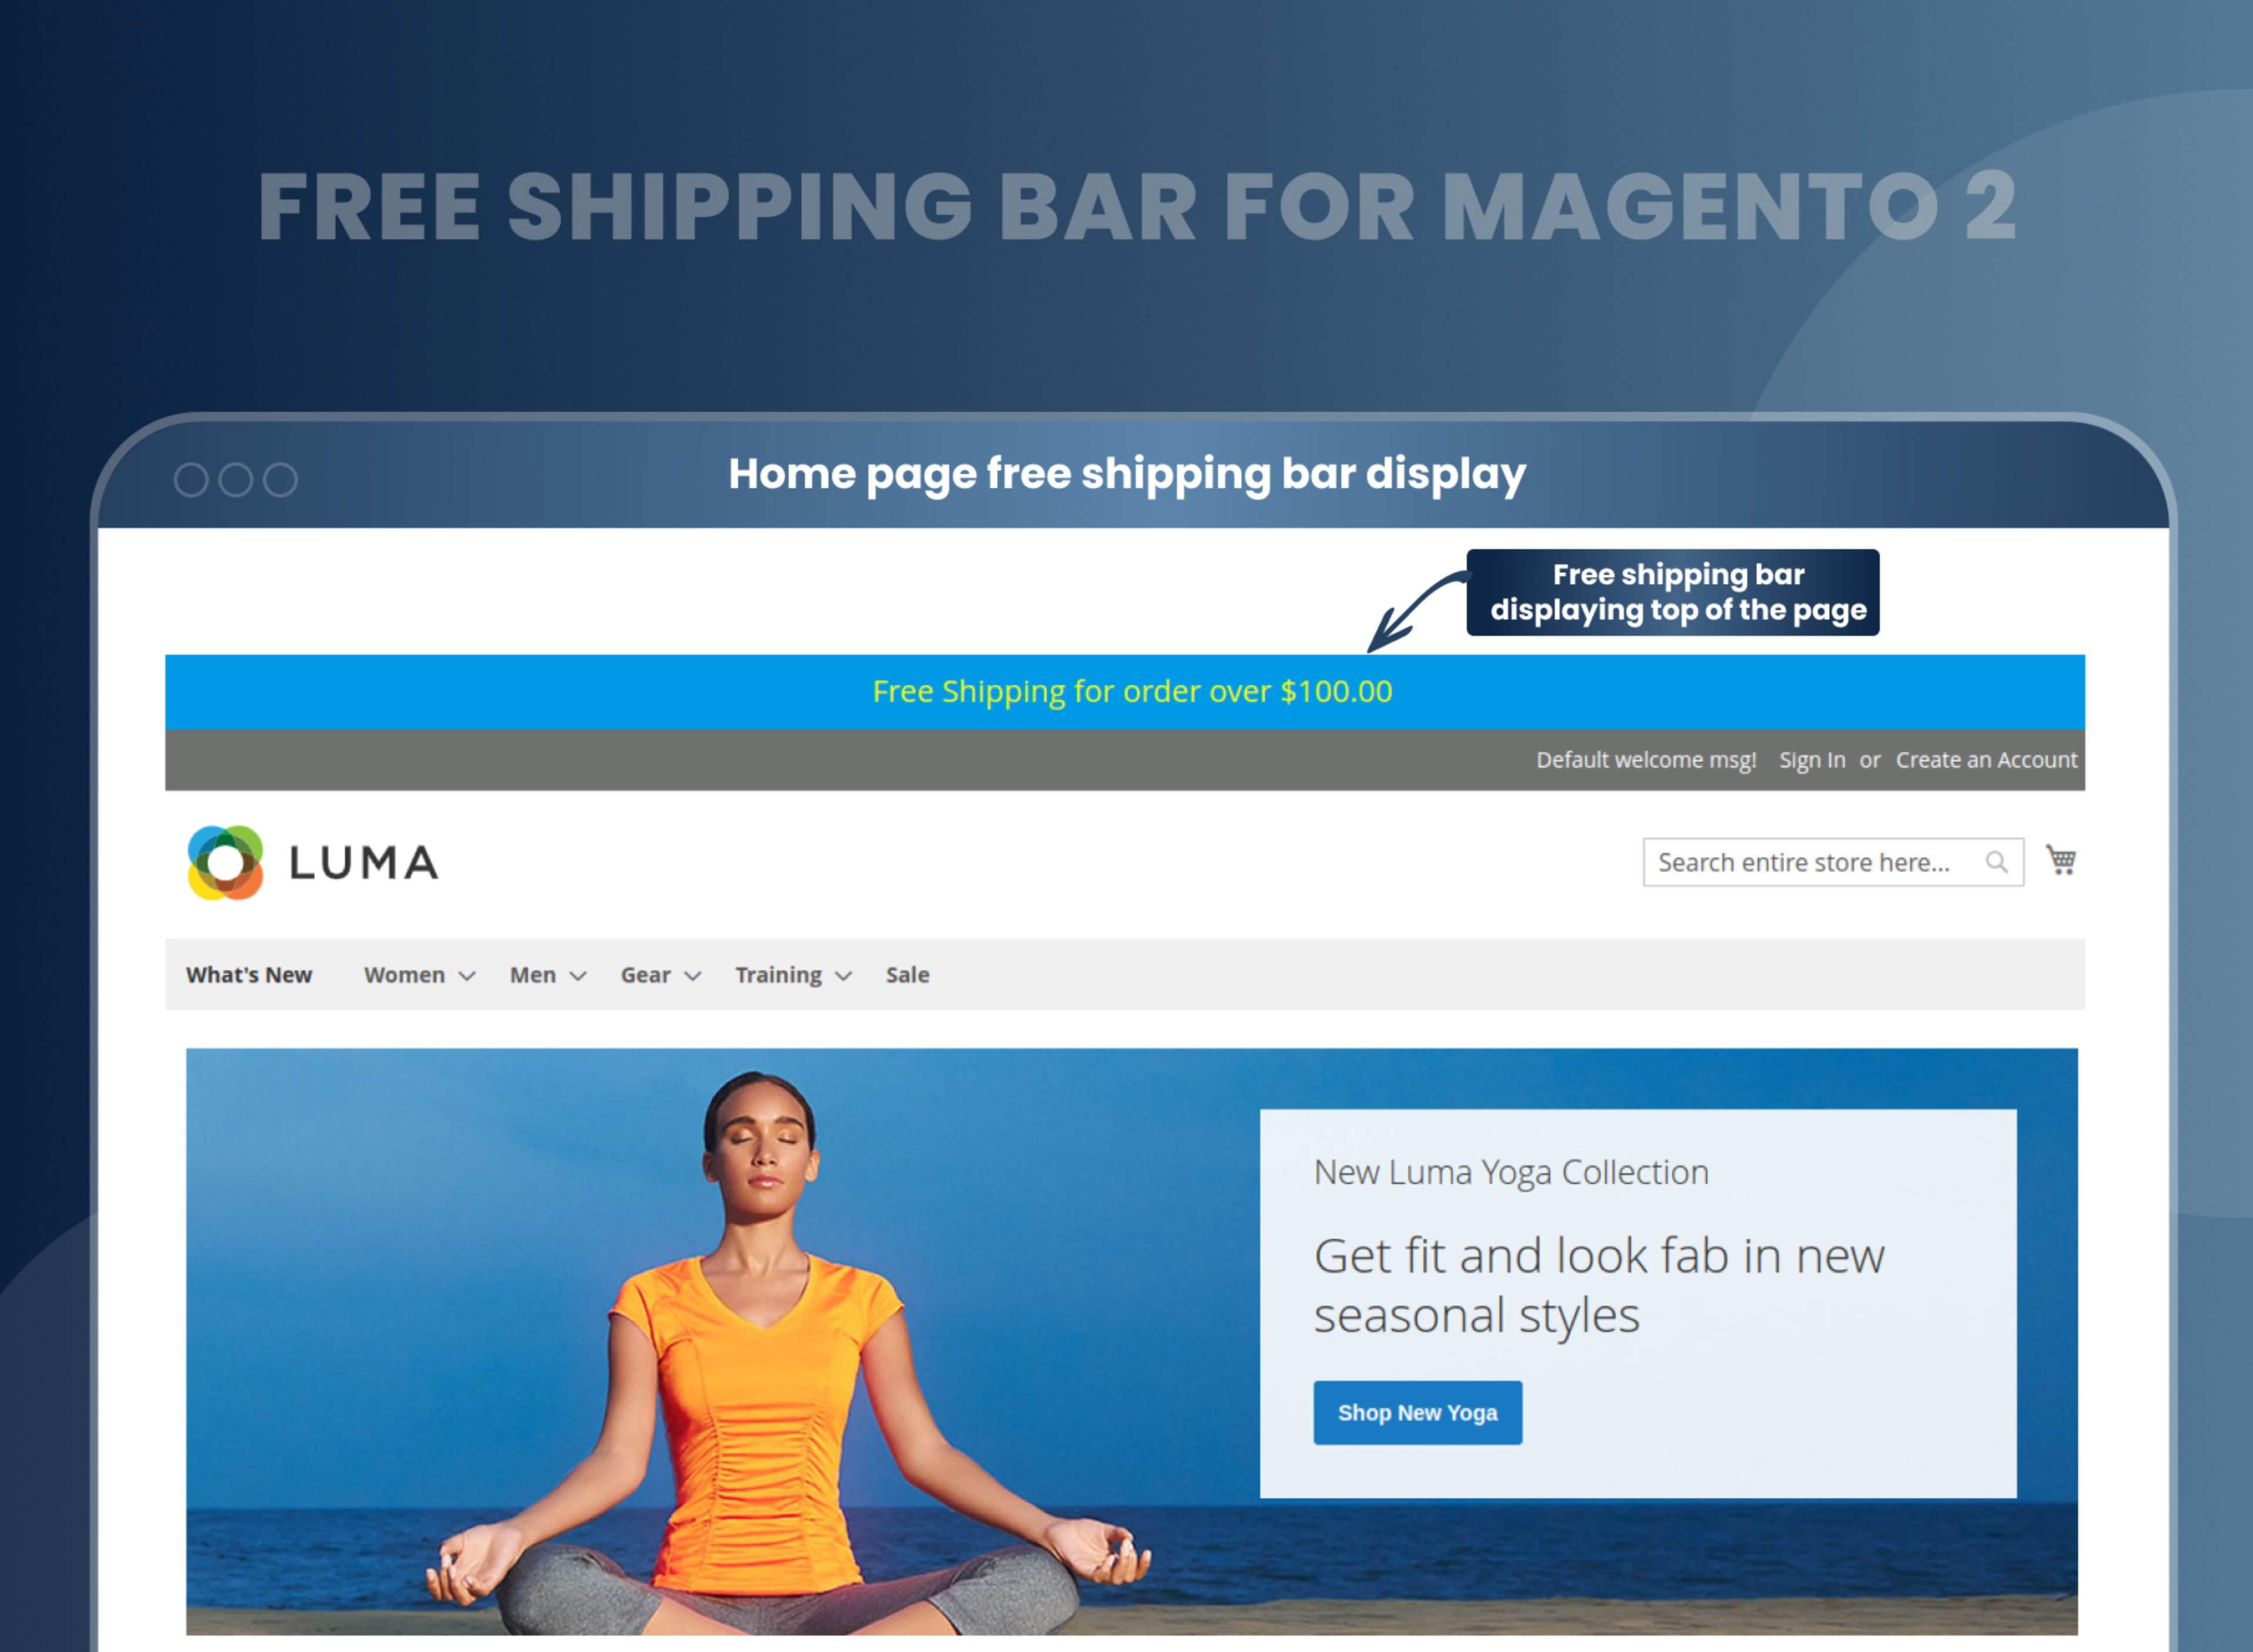 Home page free shipping bar display